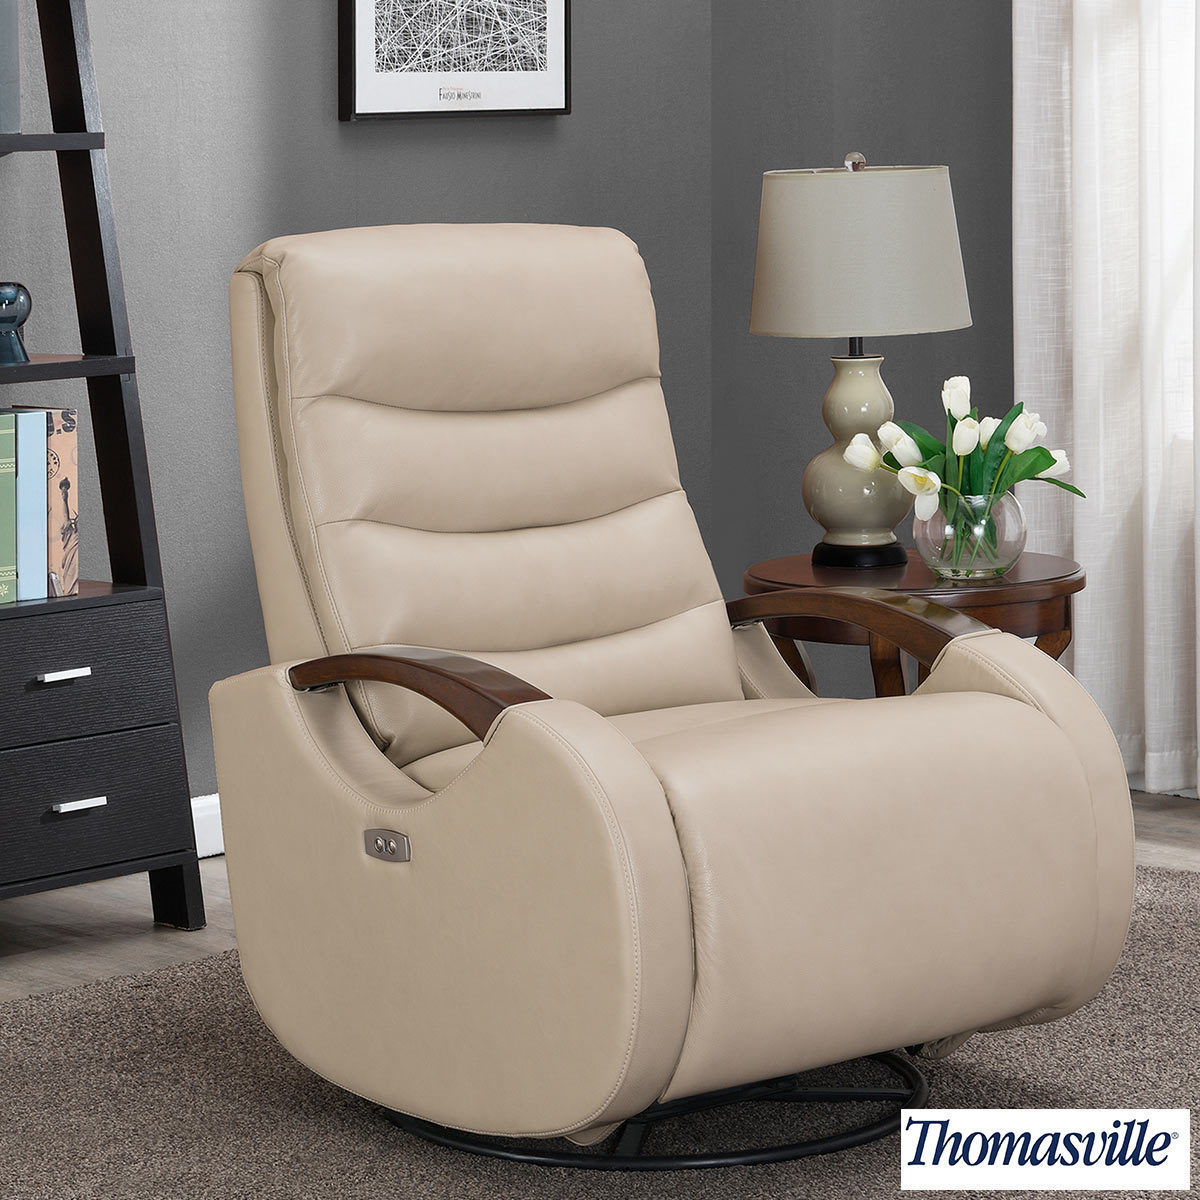 thomasville benson leather power glider recliner chair  costco uk